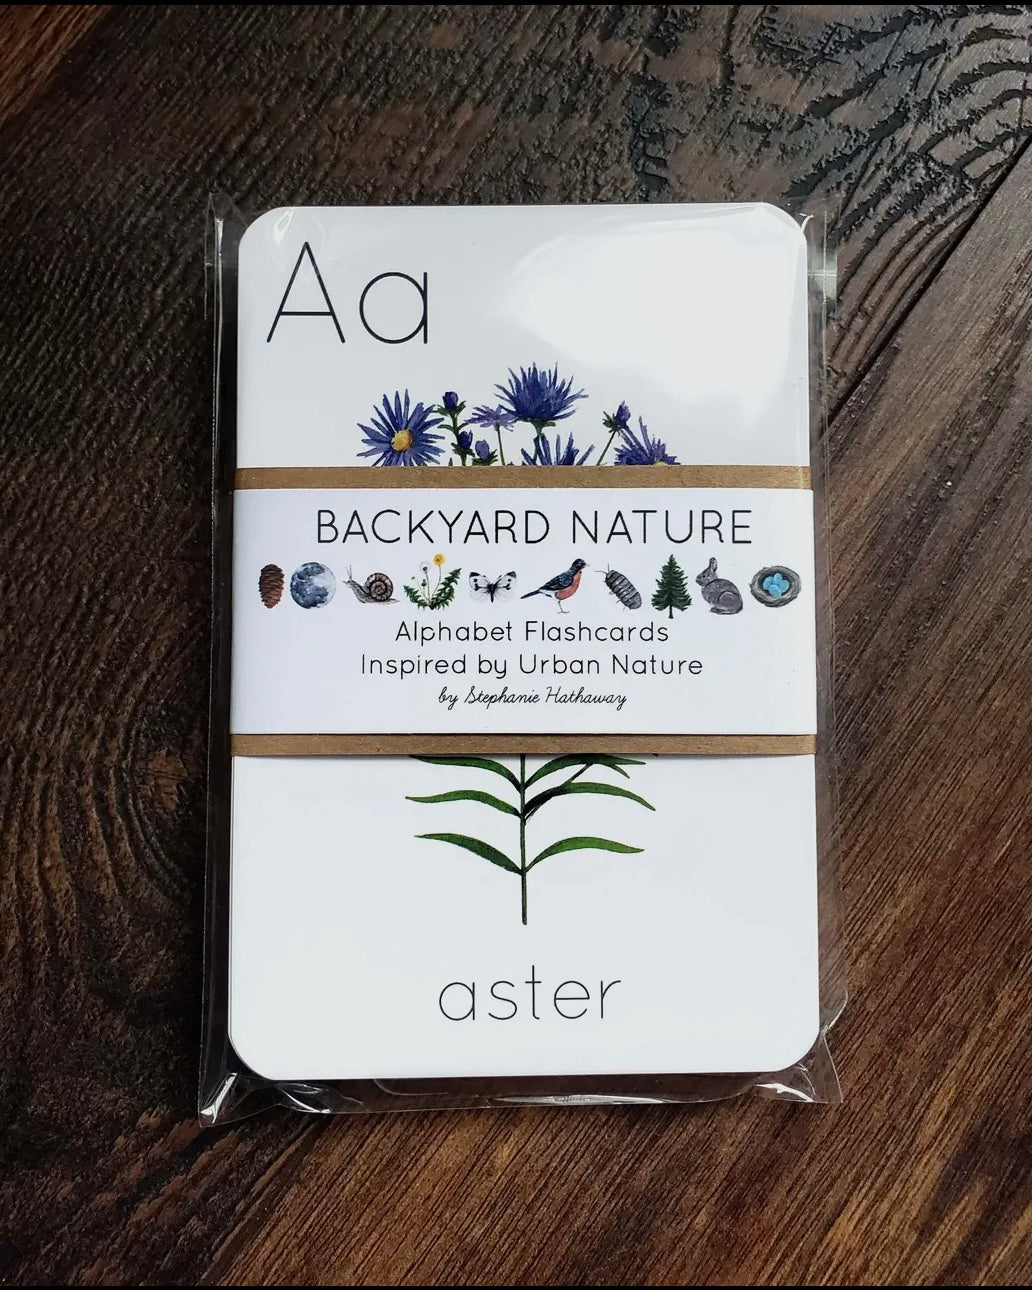 Backyard Nature
Alphabet Flashcards